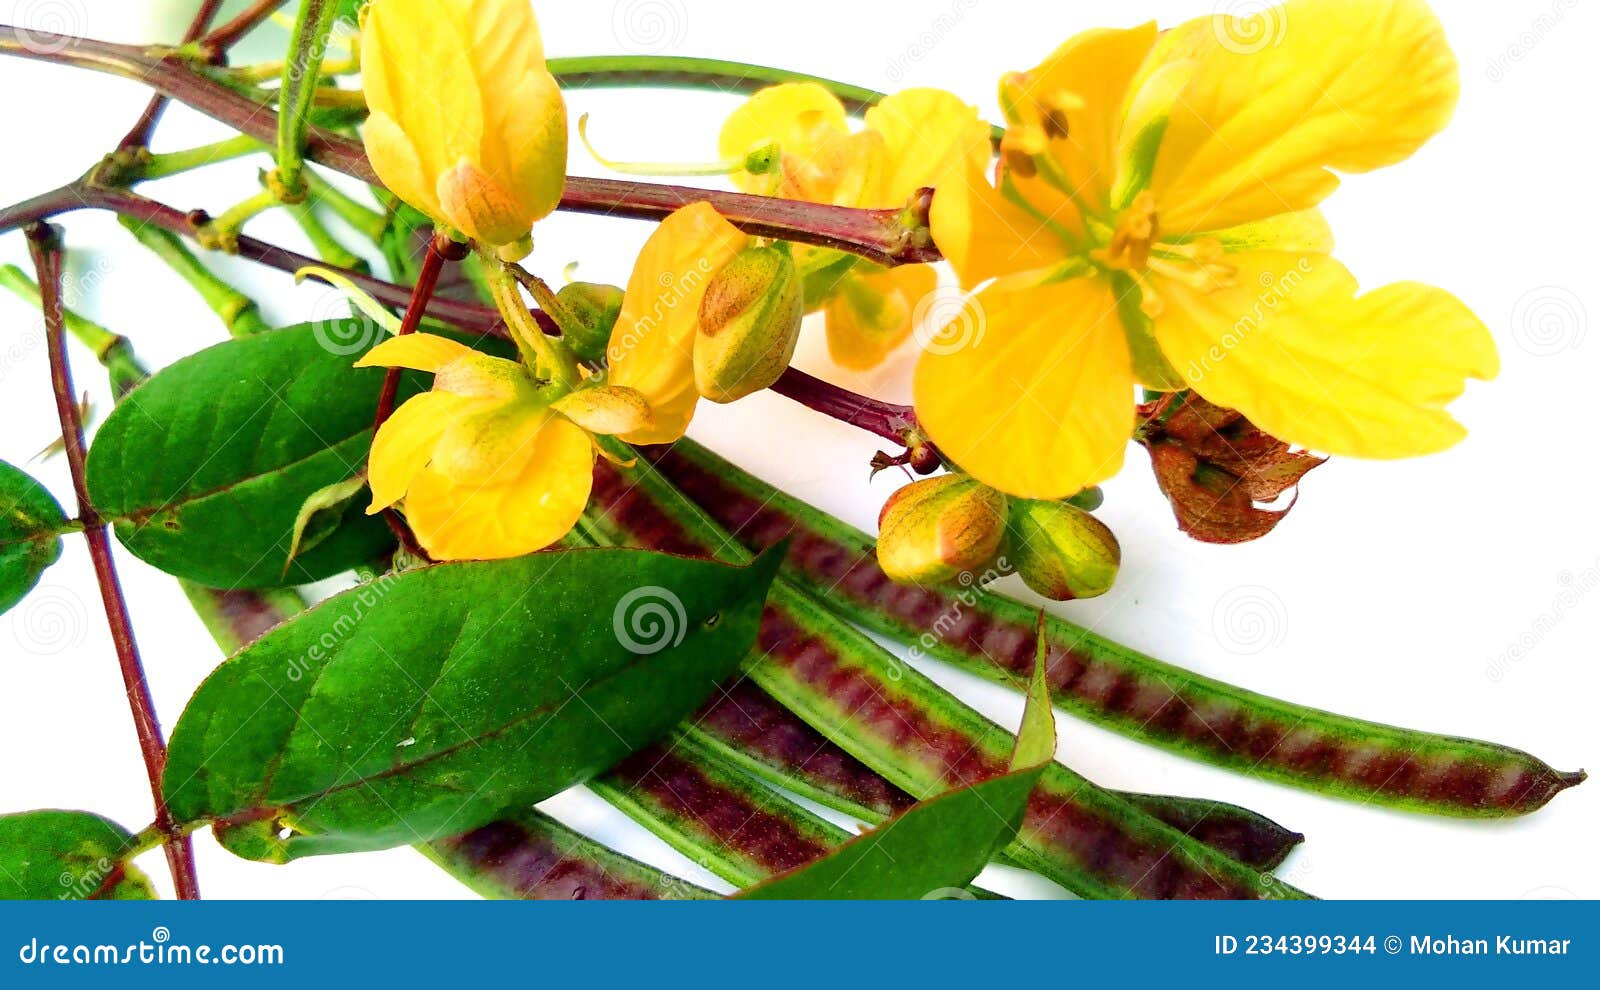 styptic weed coffeeweed flowers fruits